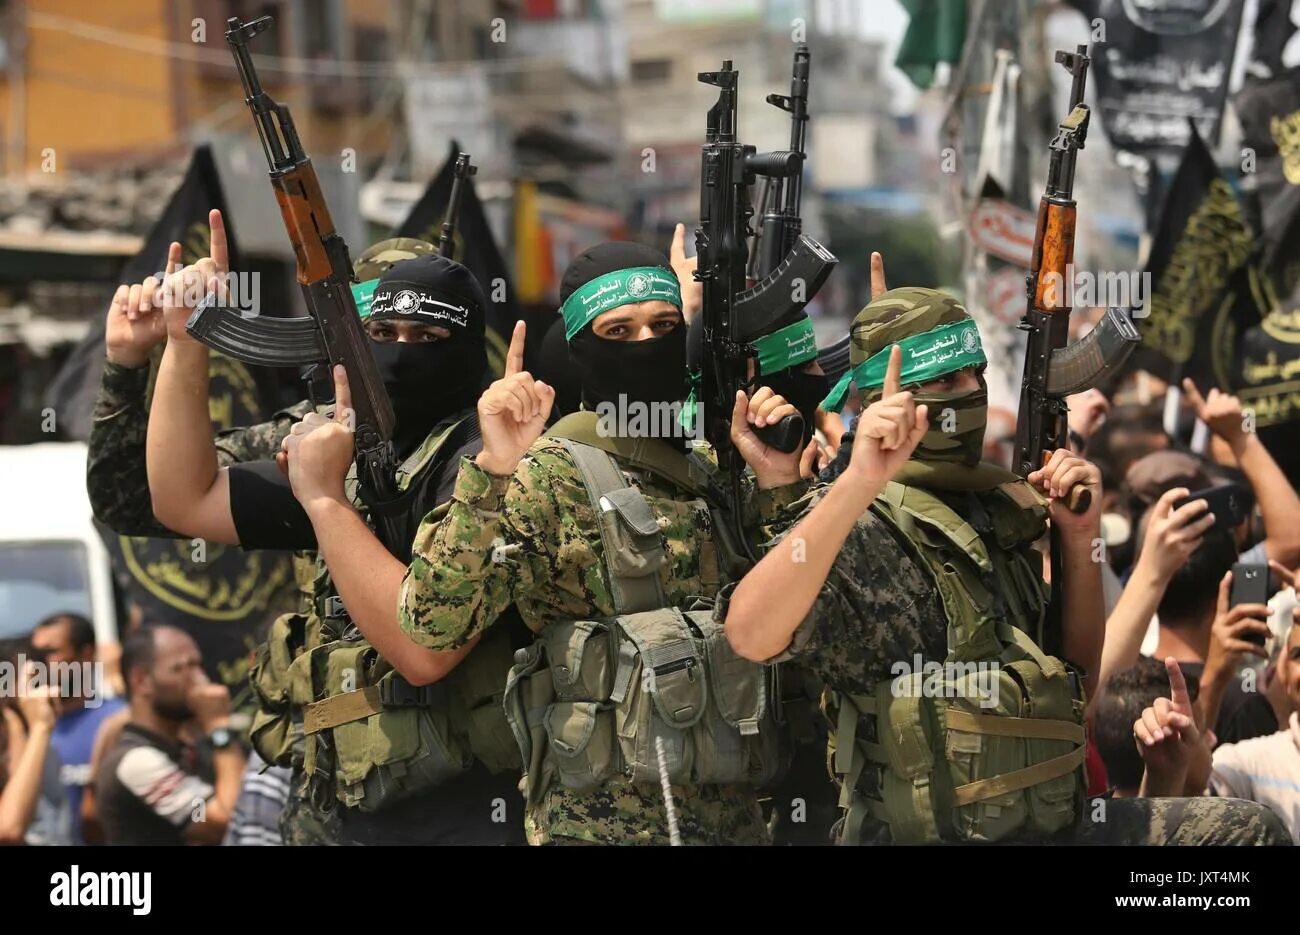 Аль-Каида ХАМАС. Палестинский ХАМАС. Современные террористы. Международные террористы. 4 террористические организации